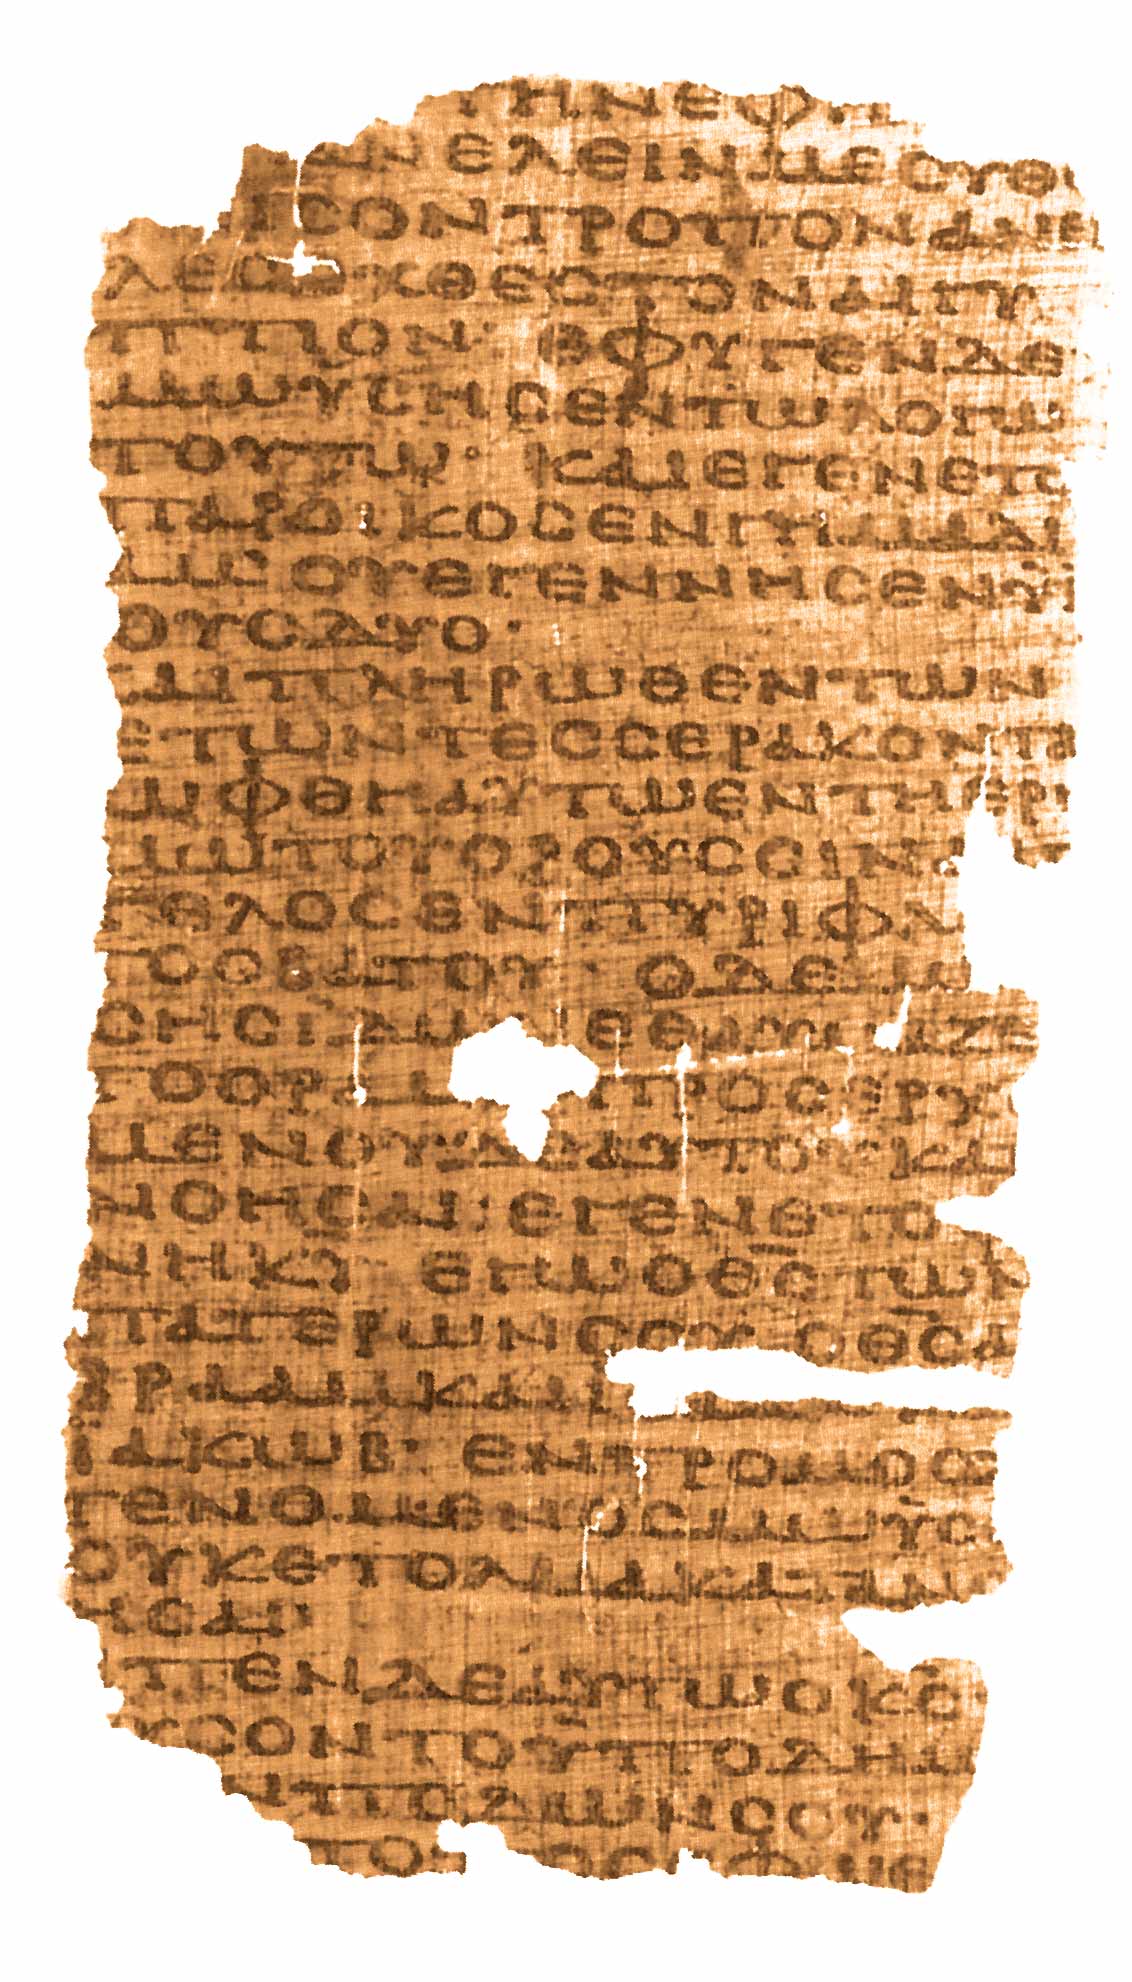 Papyrus 9